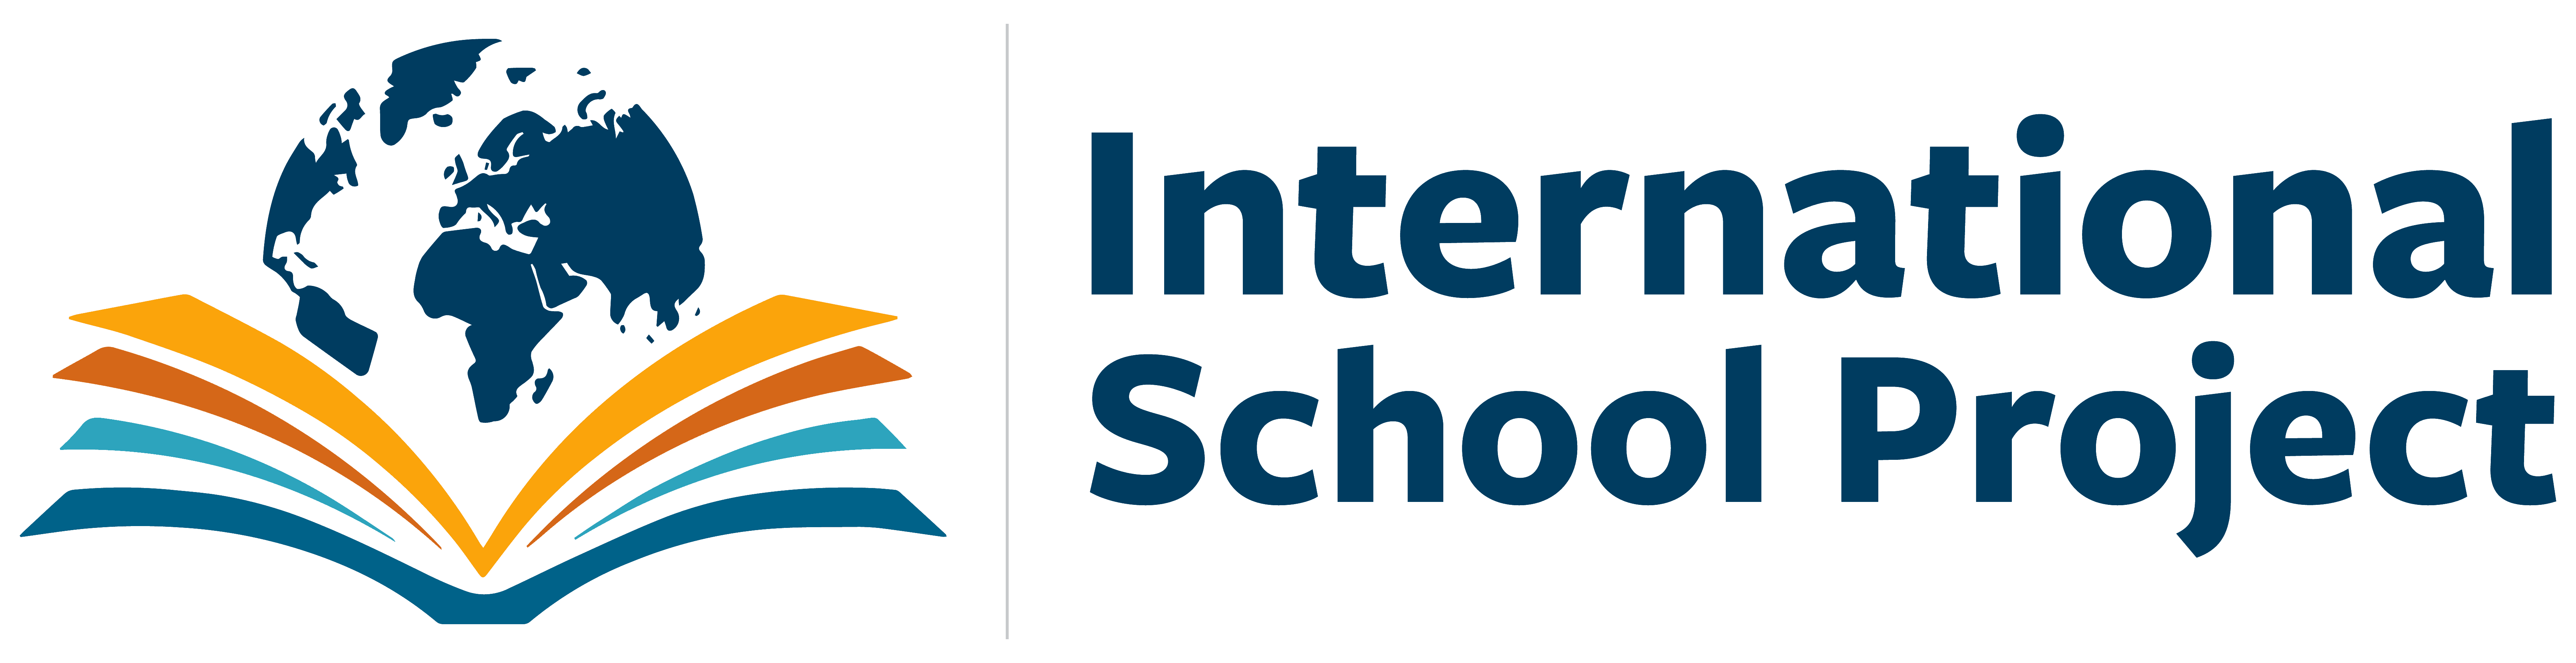 International School Project